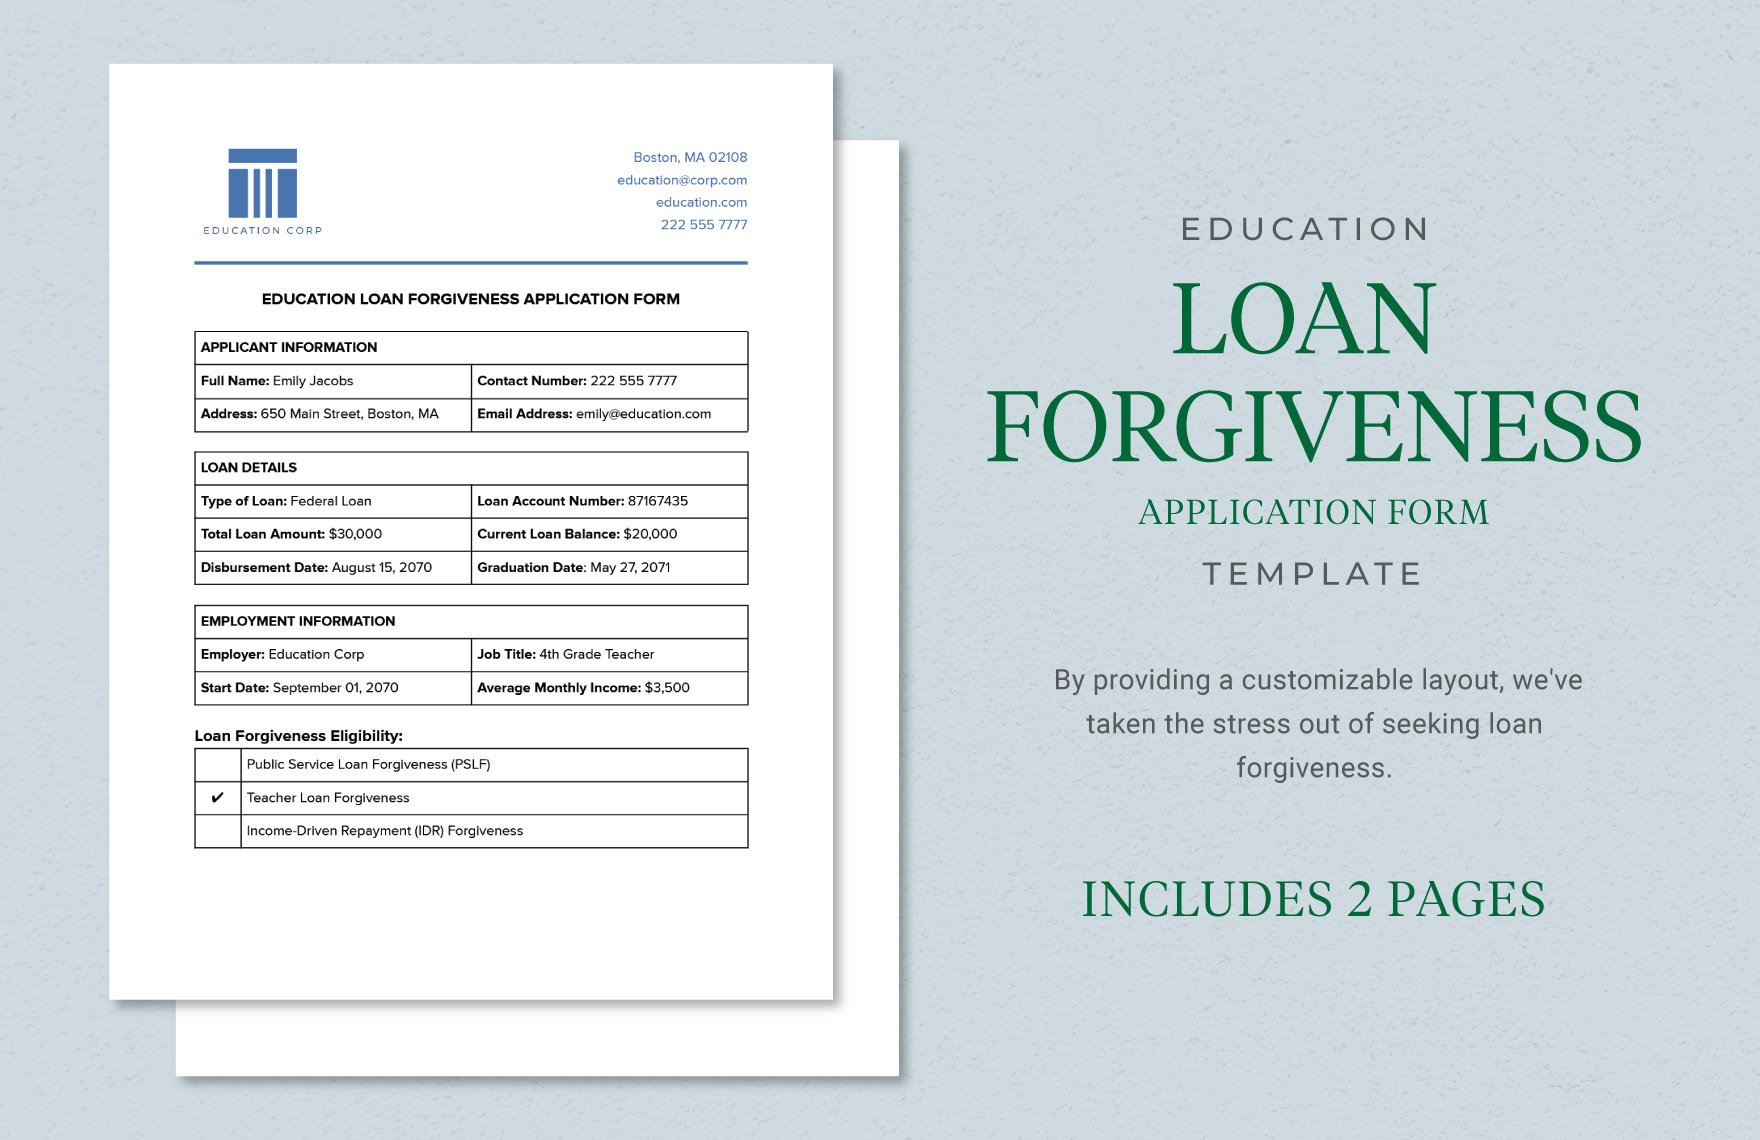 Education Loan Forgiveness Application Form Template